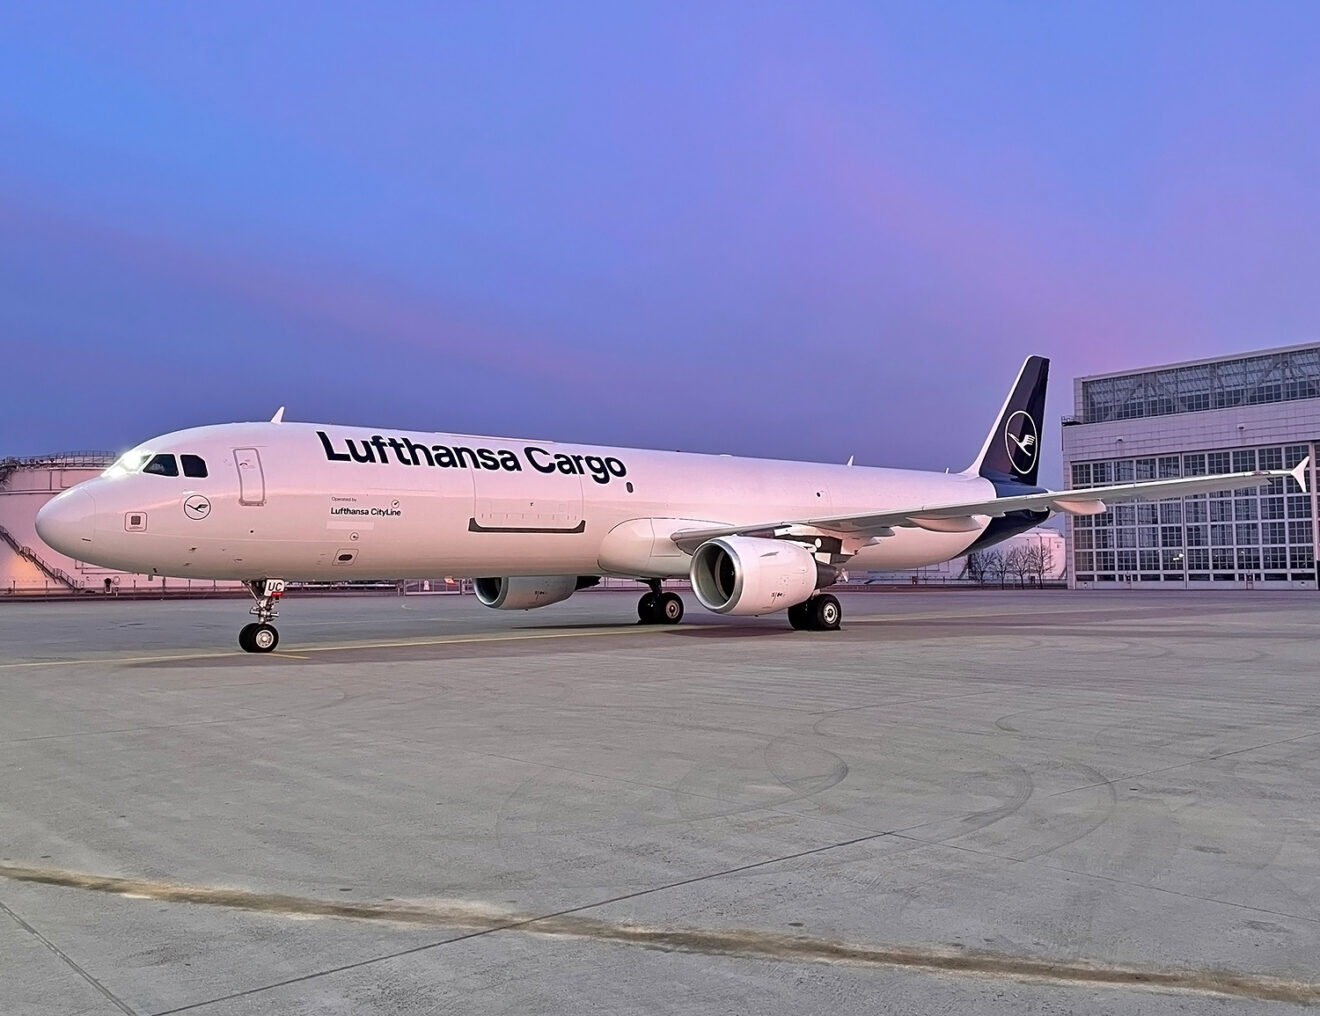 Photo Credit: Lufthansa Cargo